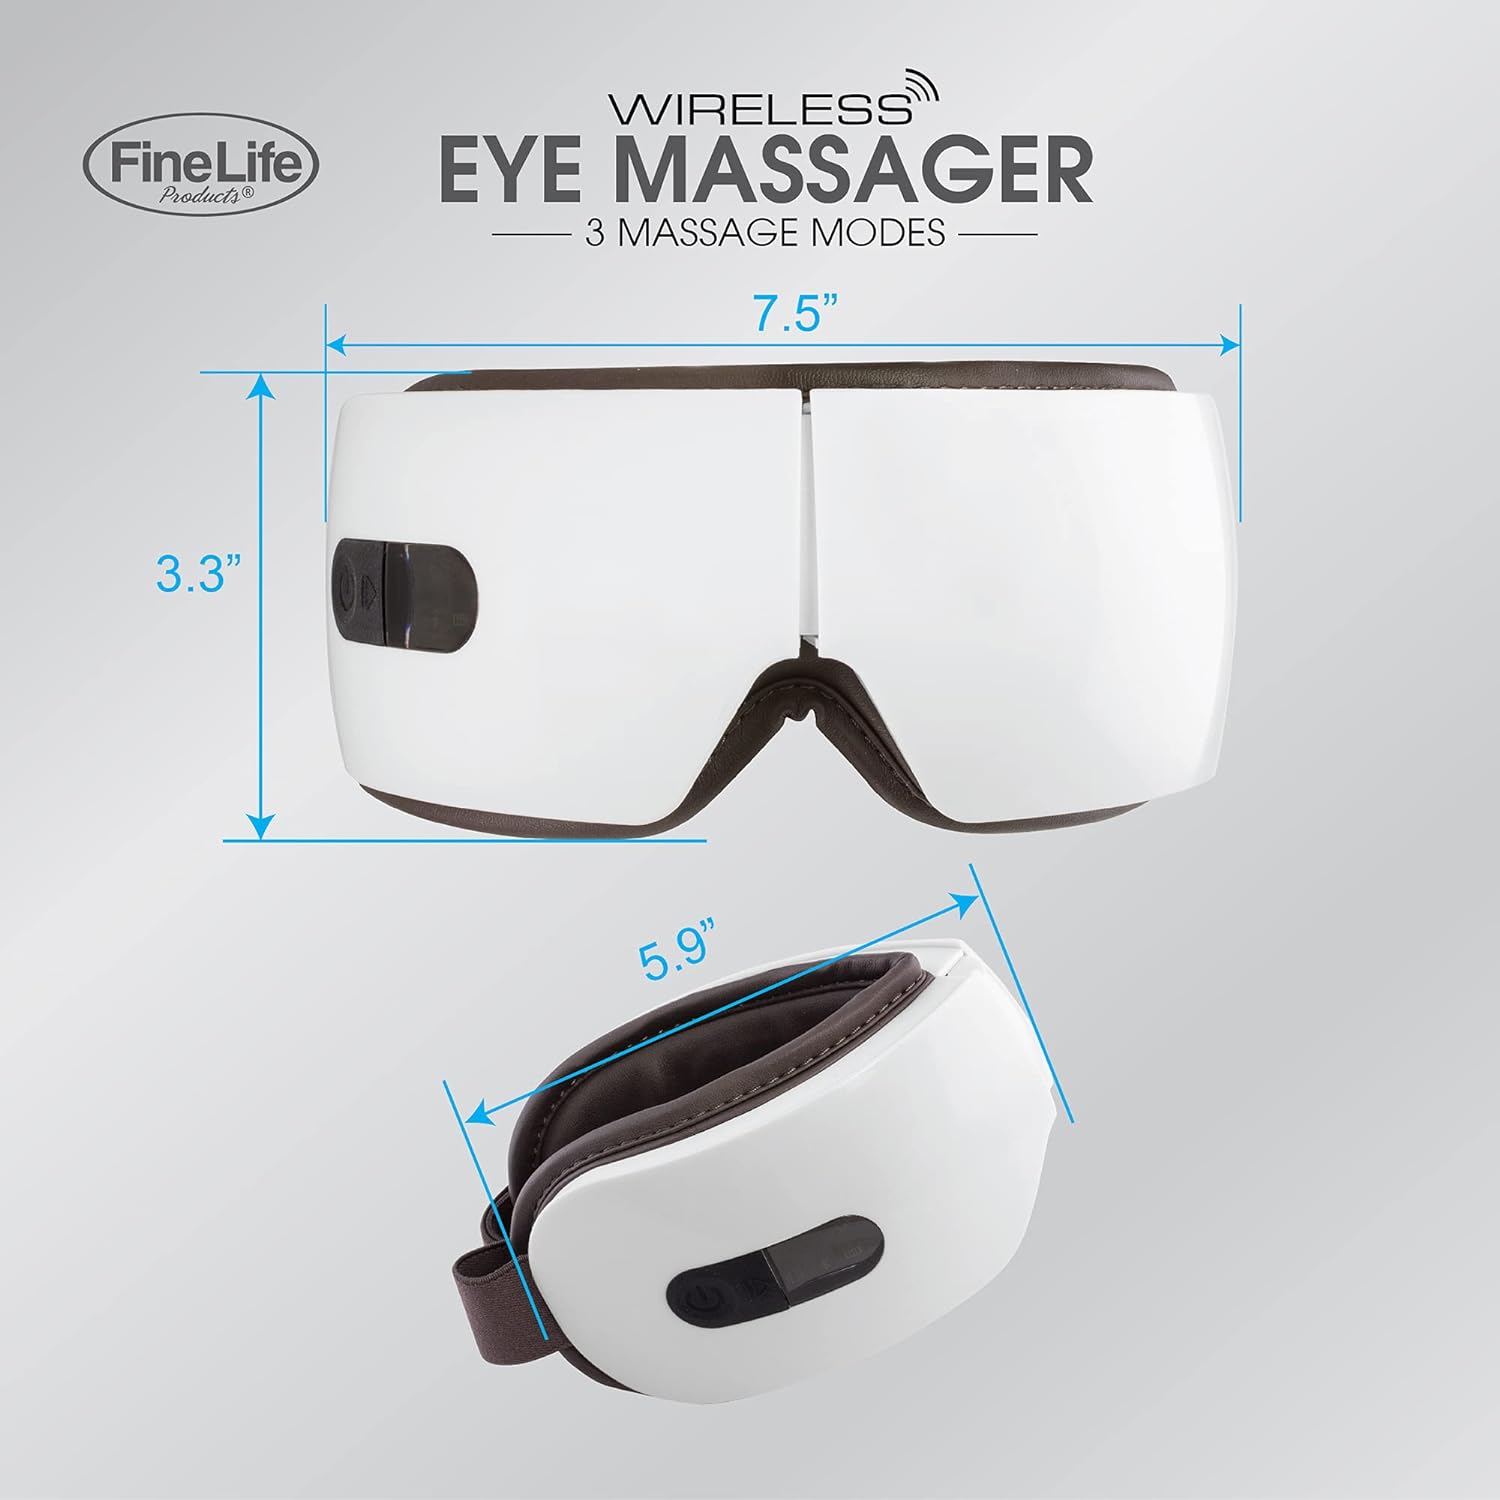 VistaTech Wireless Eye Massager - 3 Massage Modes